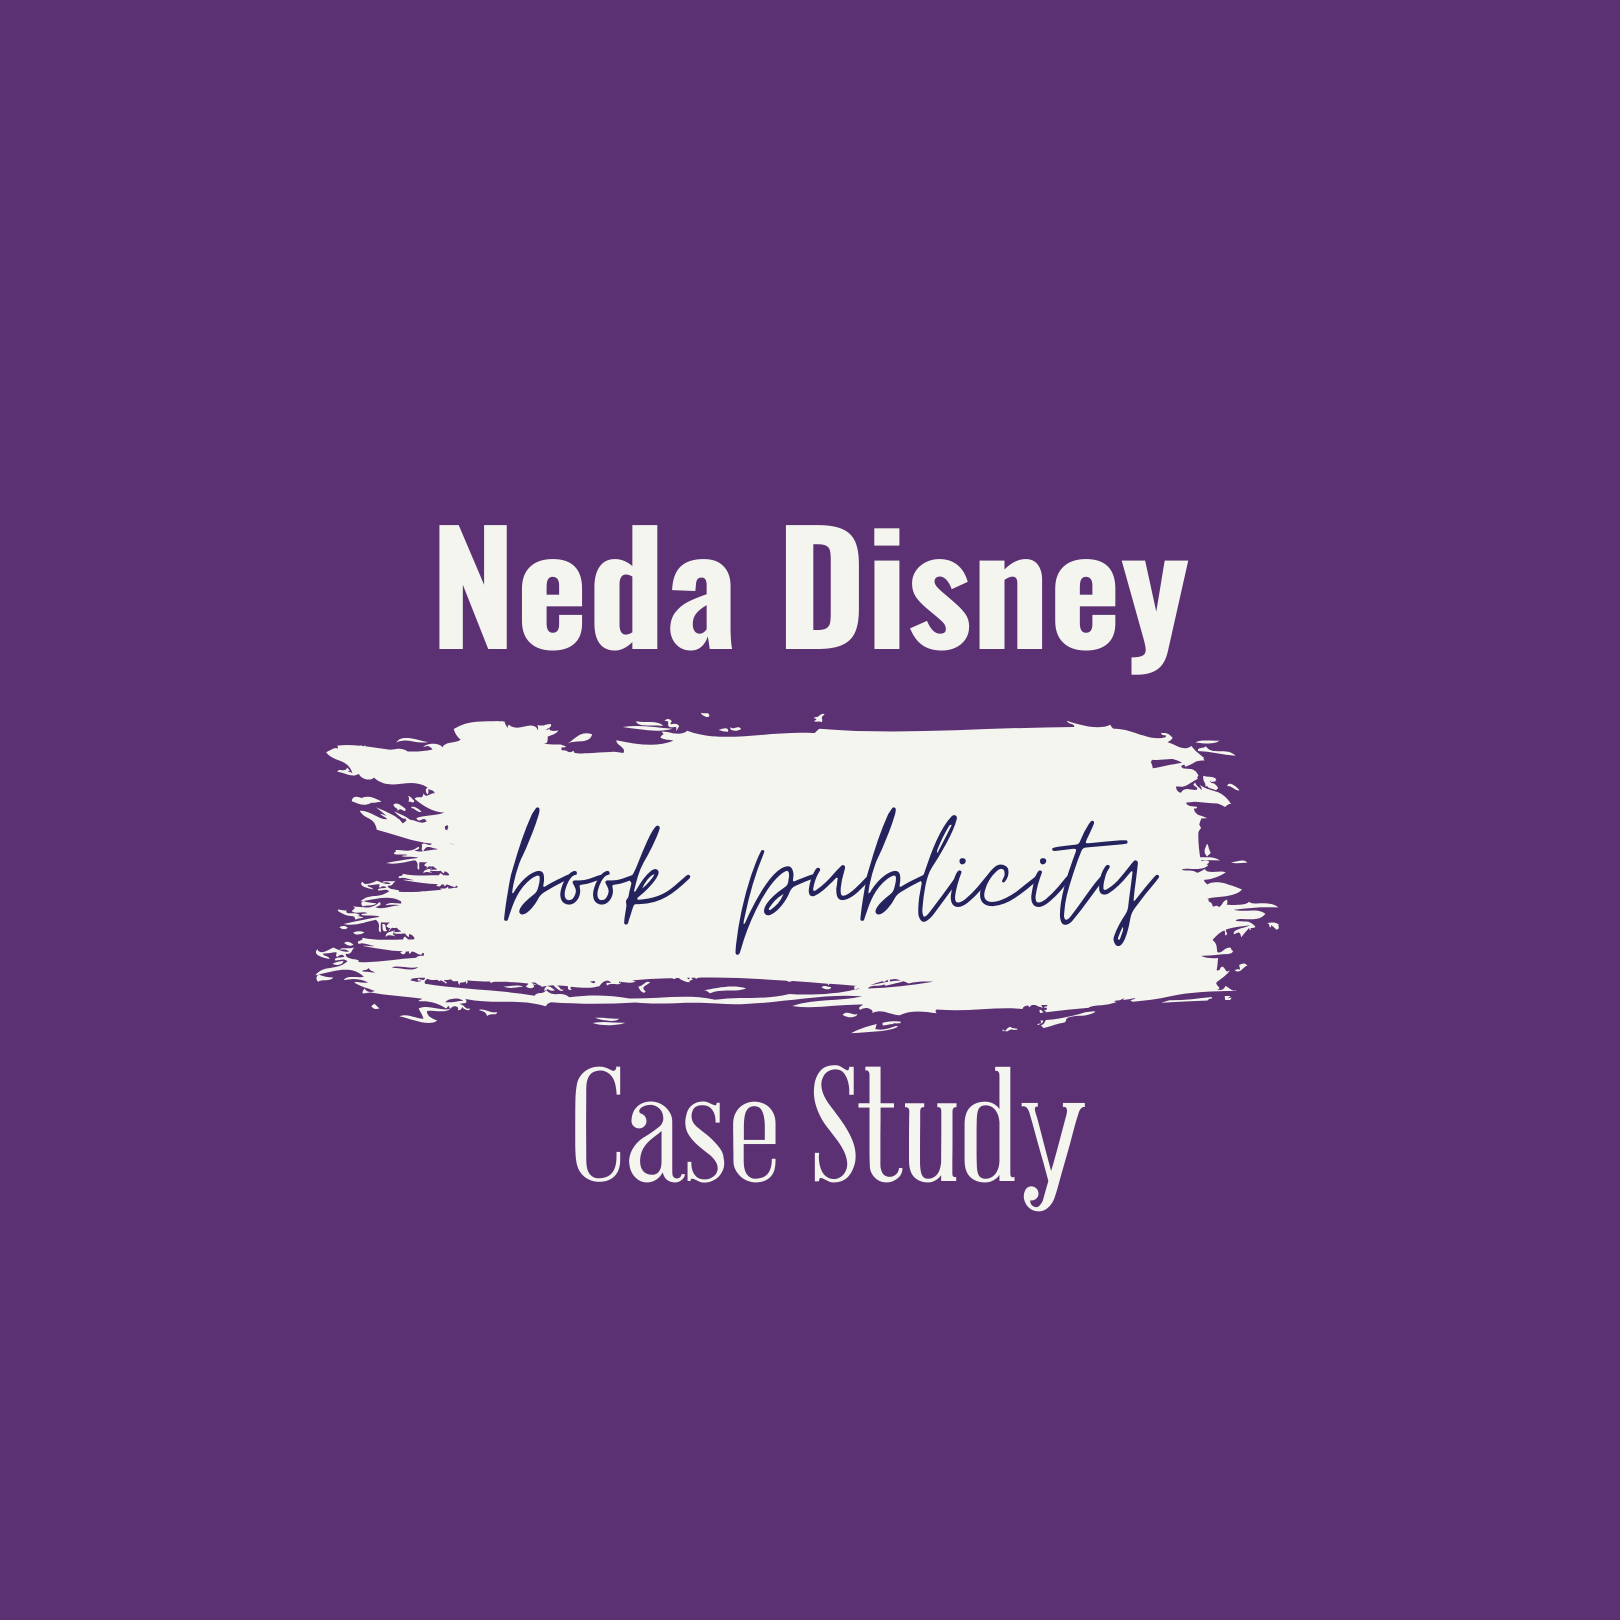 Neda Disney book publicity case study.